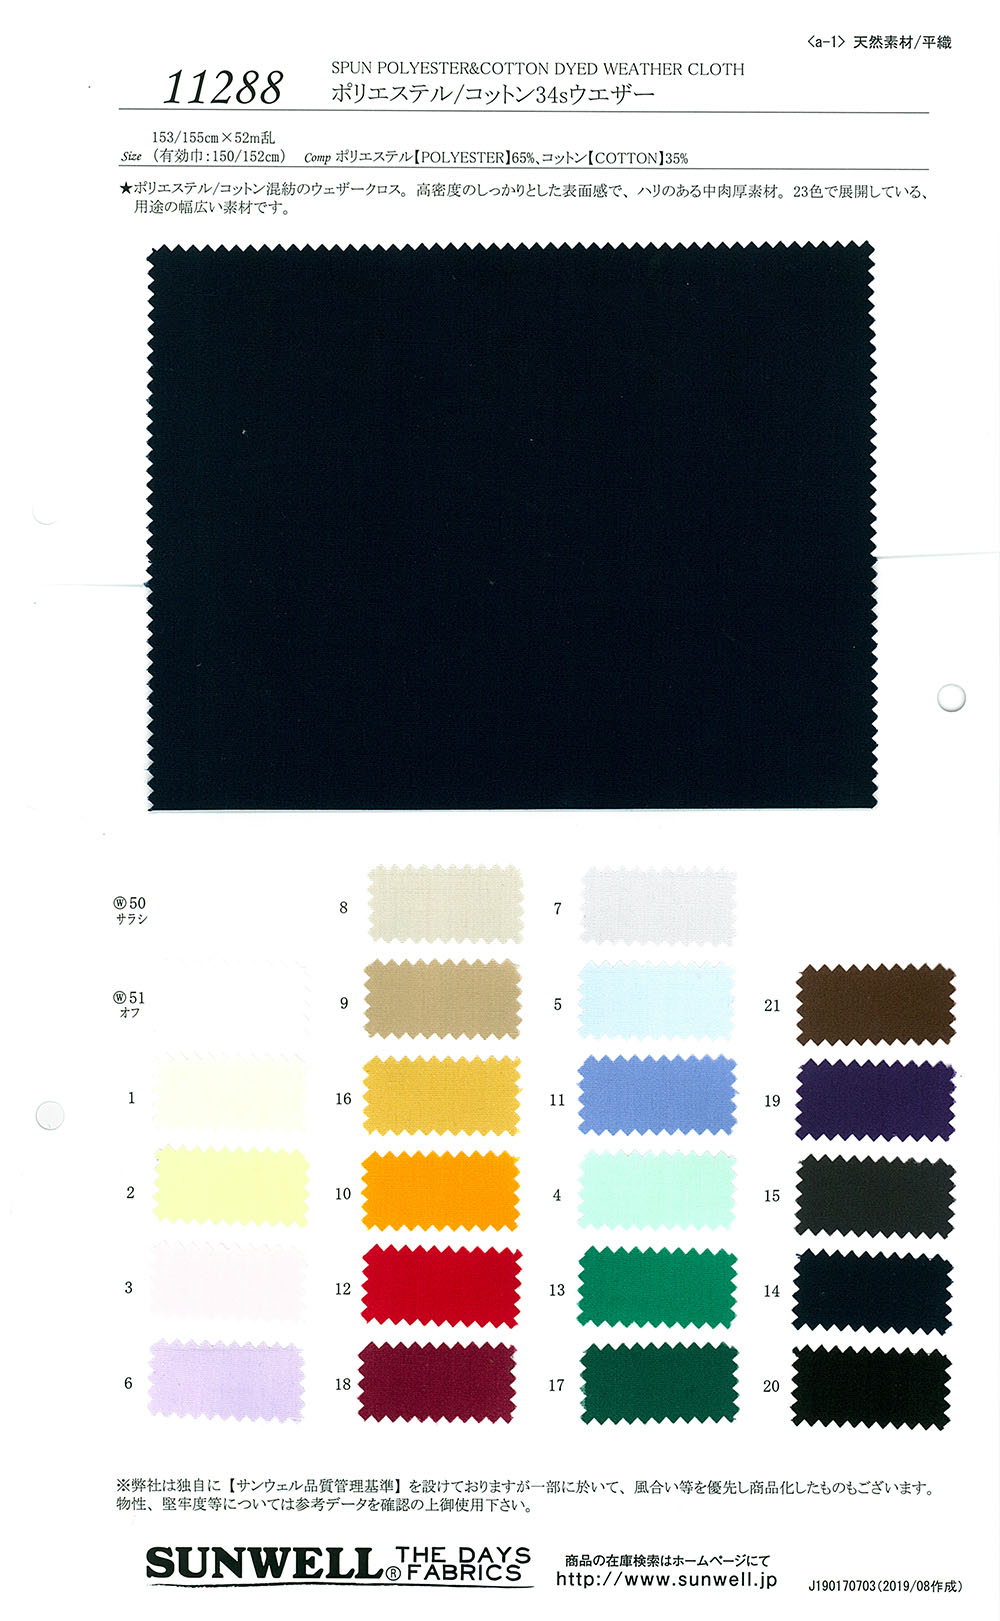 11288 Polyester/Baumwolle 34 Einfädiges Wetter[Textilgewebe] SUNWELL